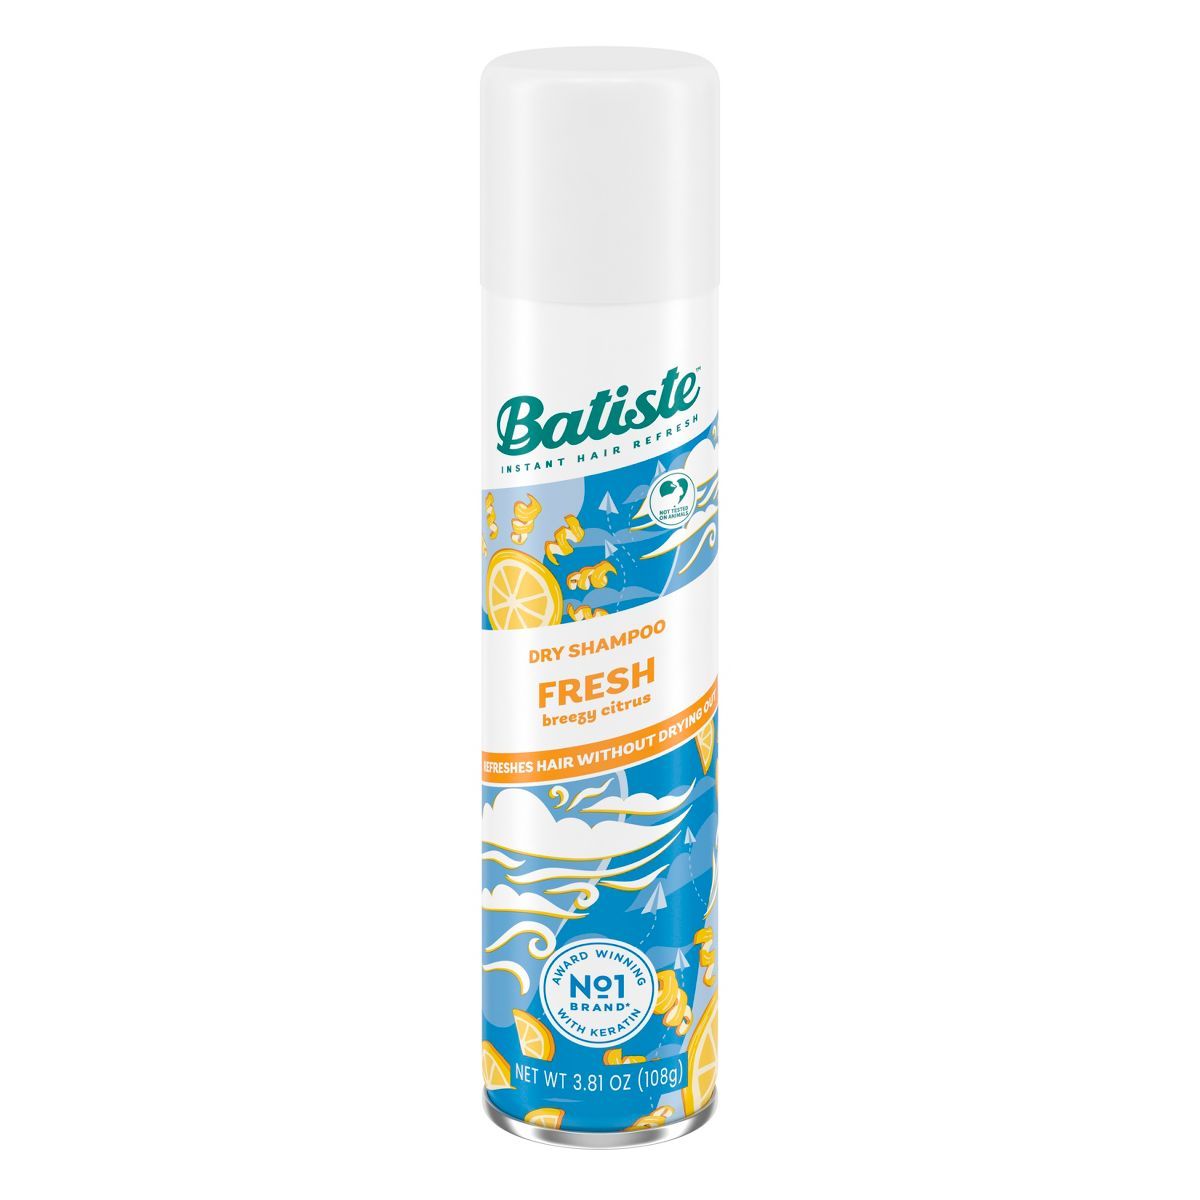 Batiste Fresh Breezy Citrus Dry Shampoo - 3.81oz | Target